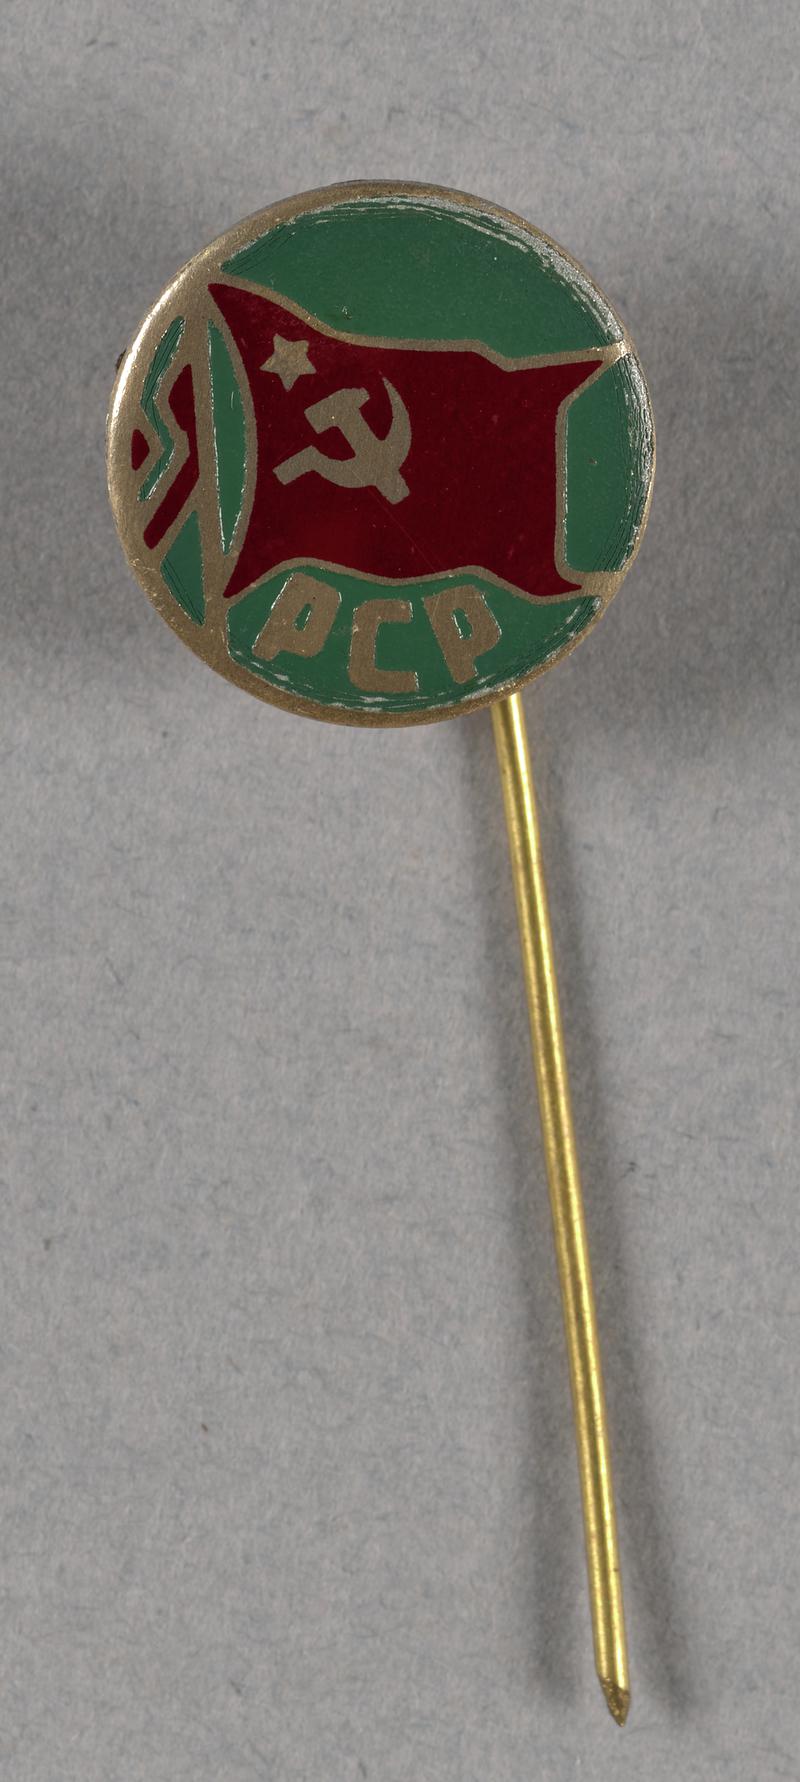 Pin badge of Partido Comunista Português (Portugese Communist Party).